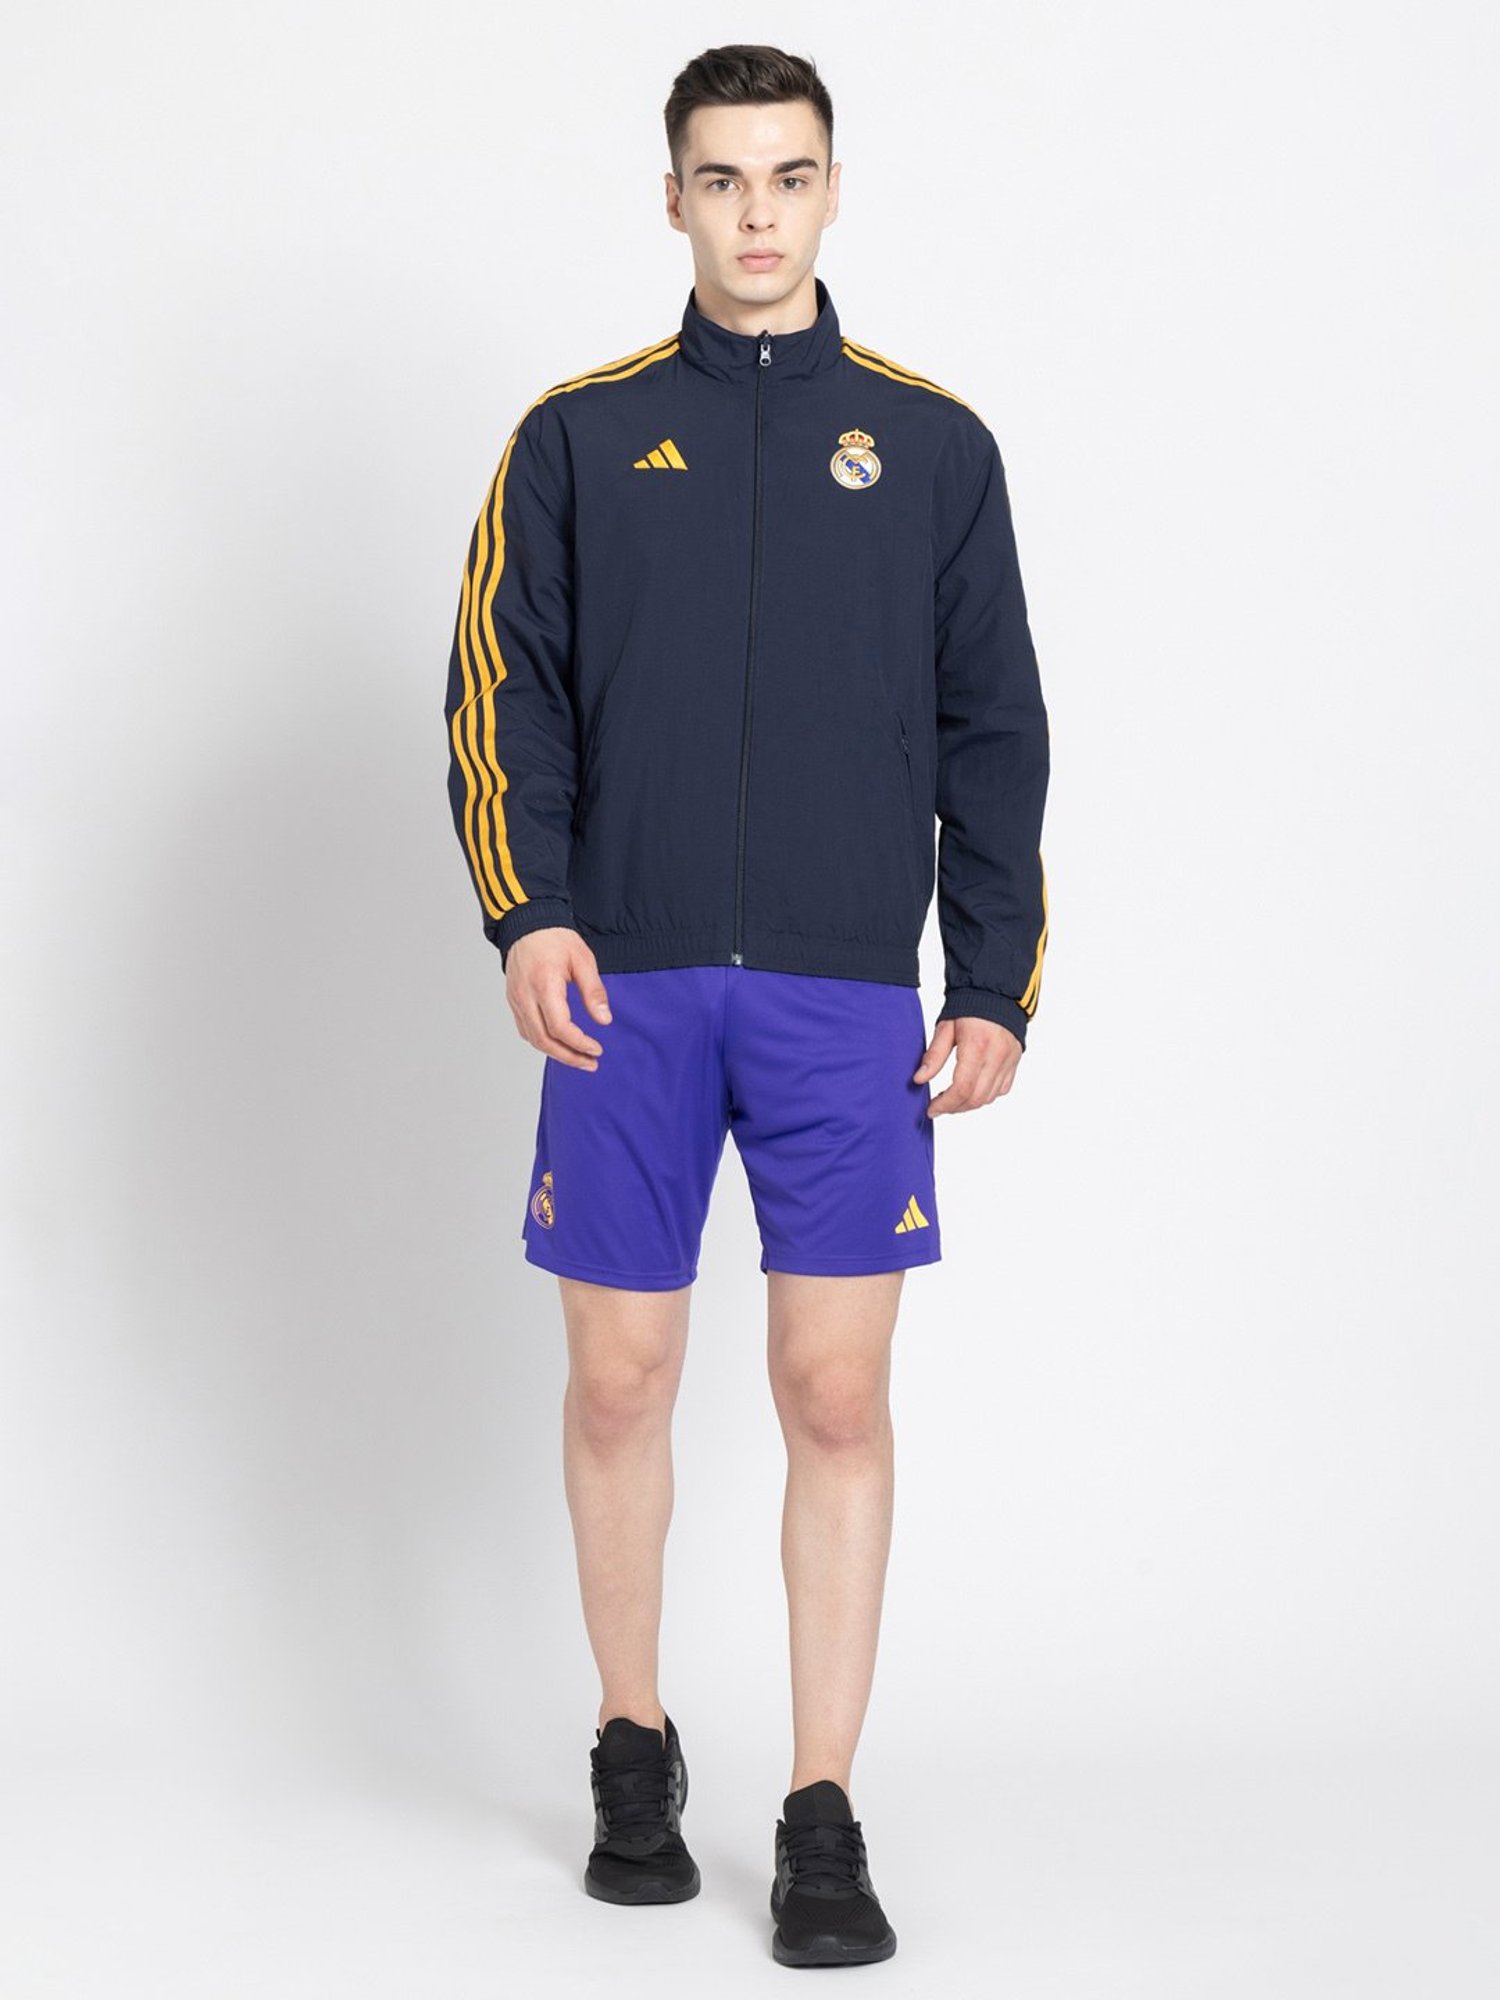 Real Madrid Football Club Jacket – The Venu Sports Shop